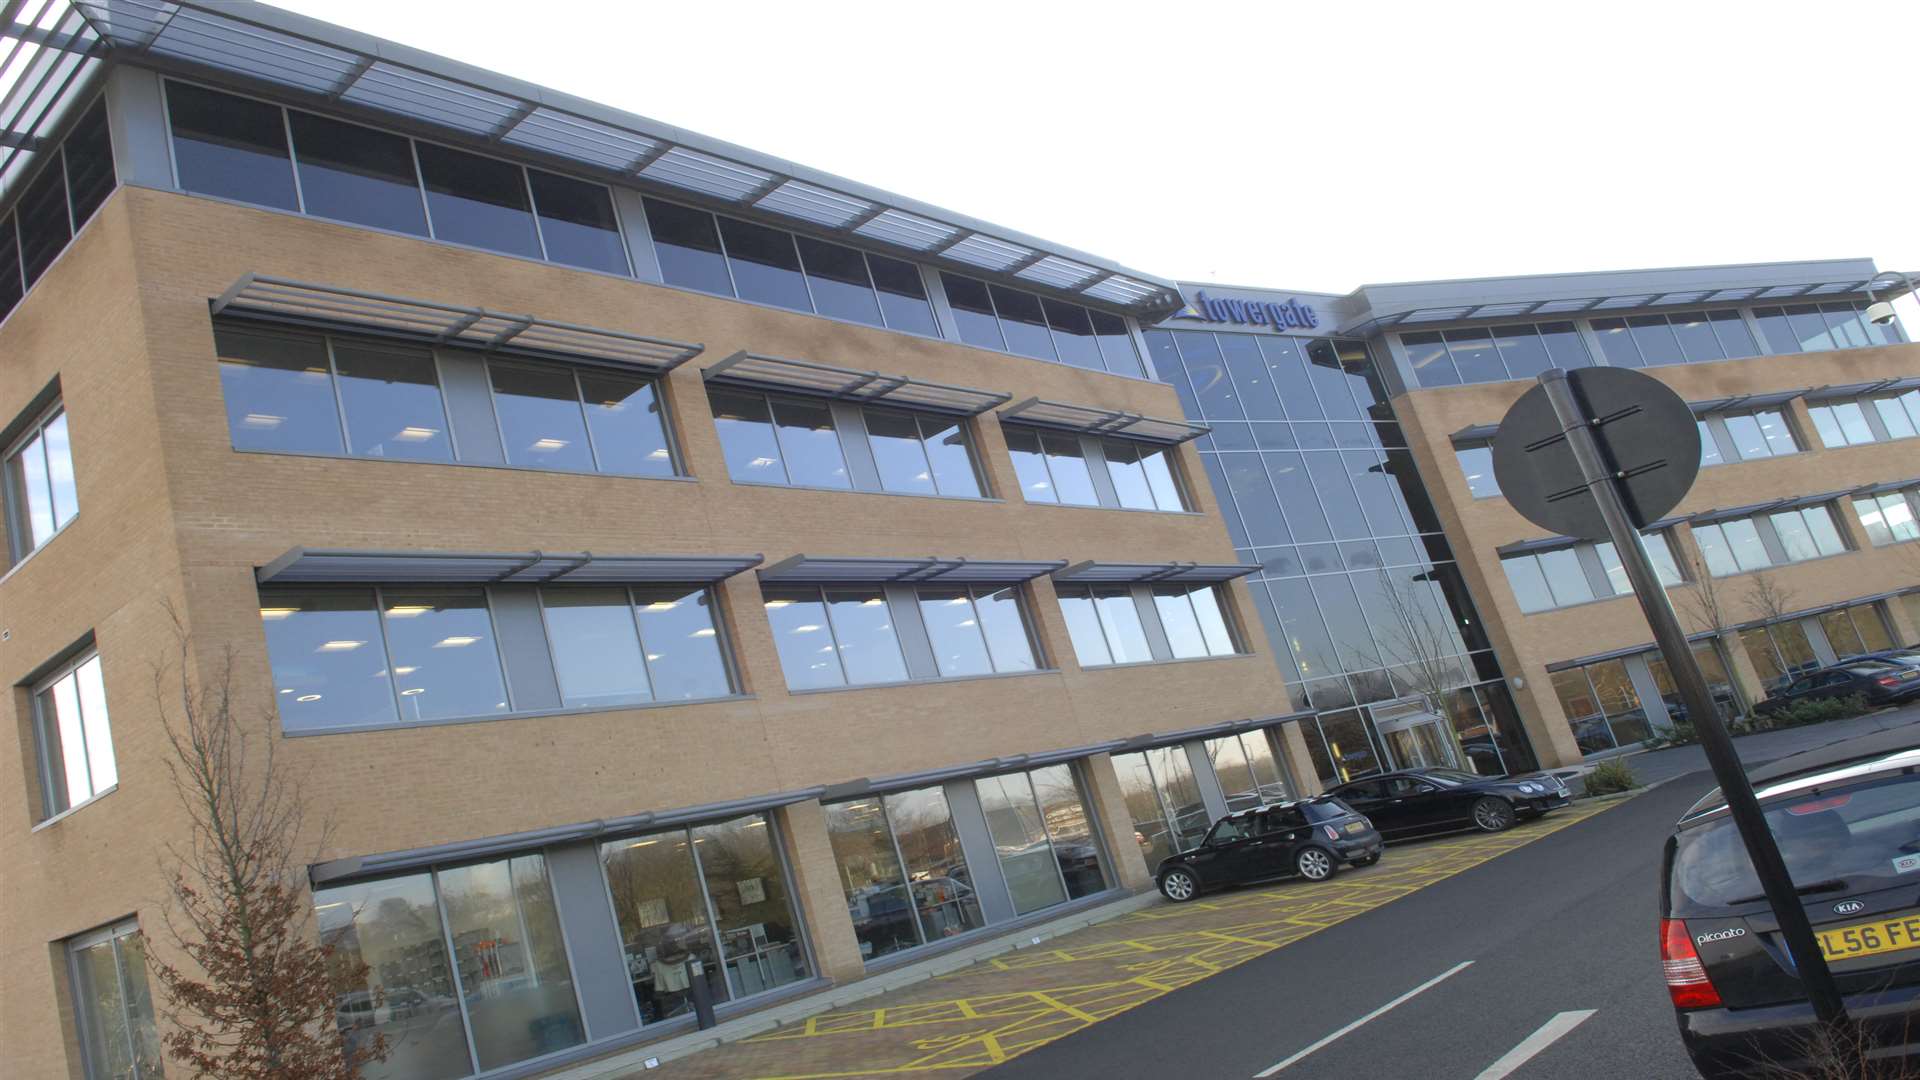 Towergate's headquarters in Maidstone